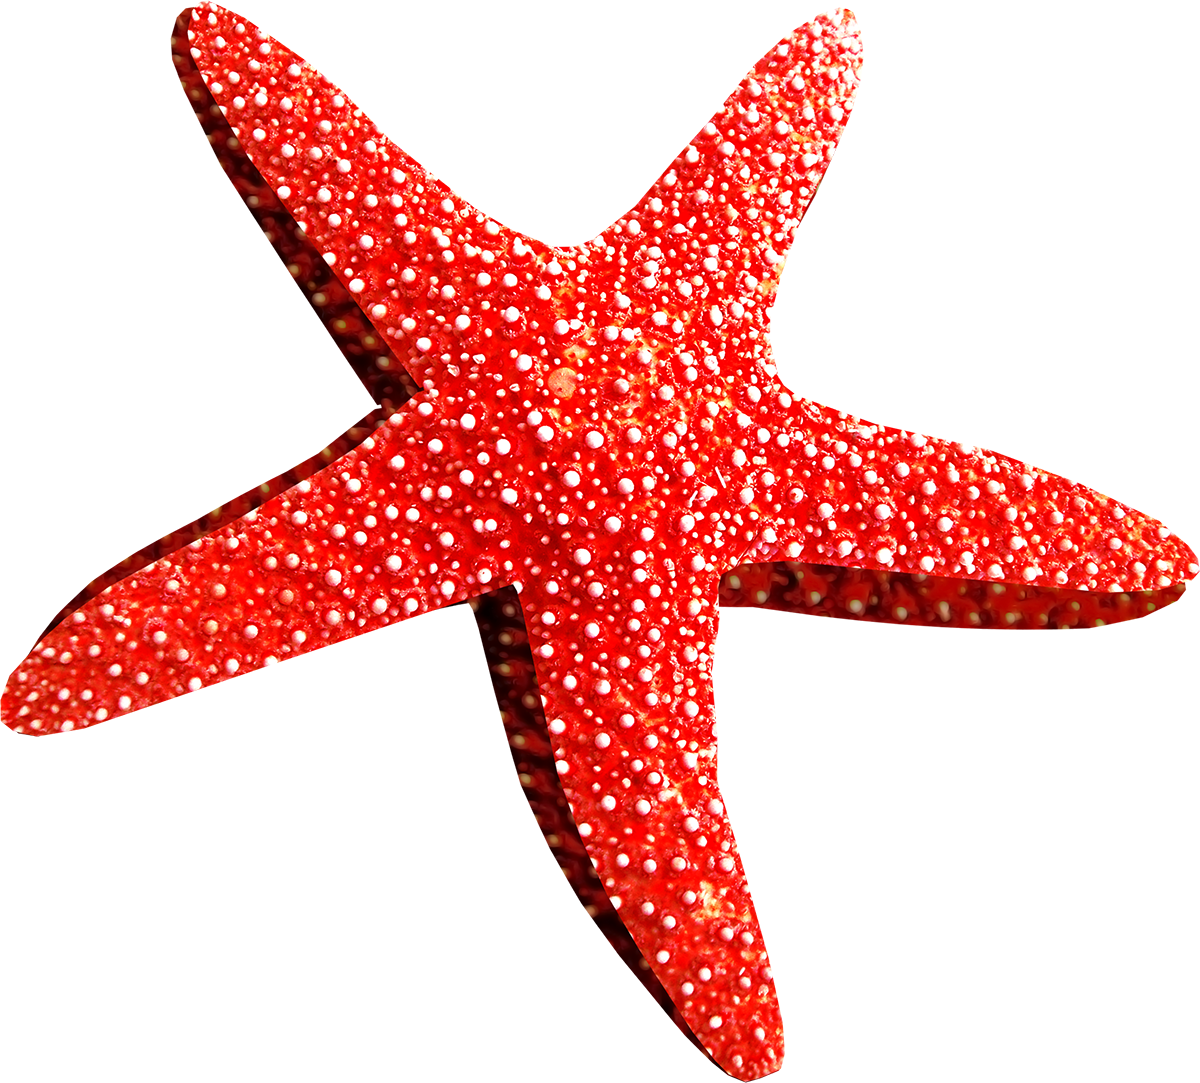 Estrela do Mar